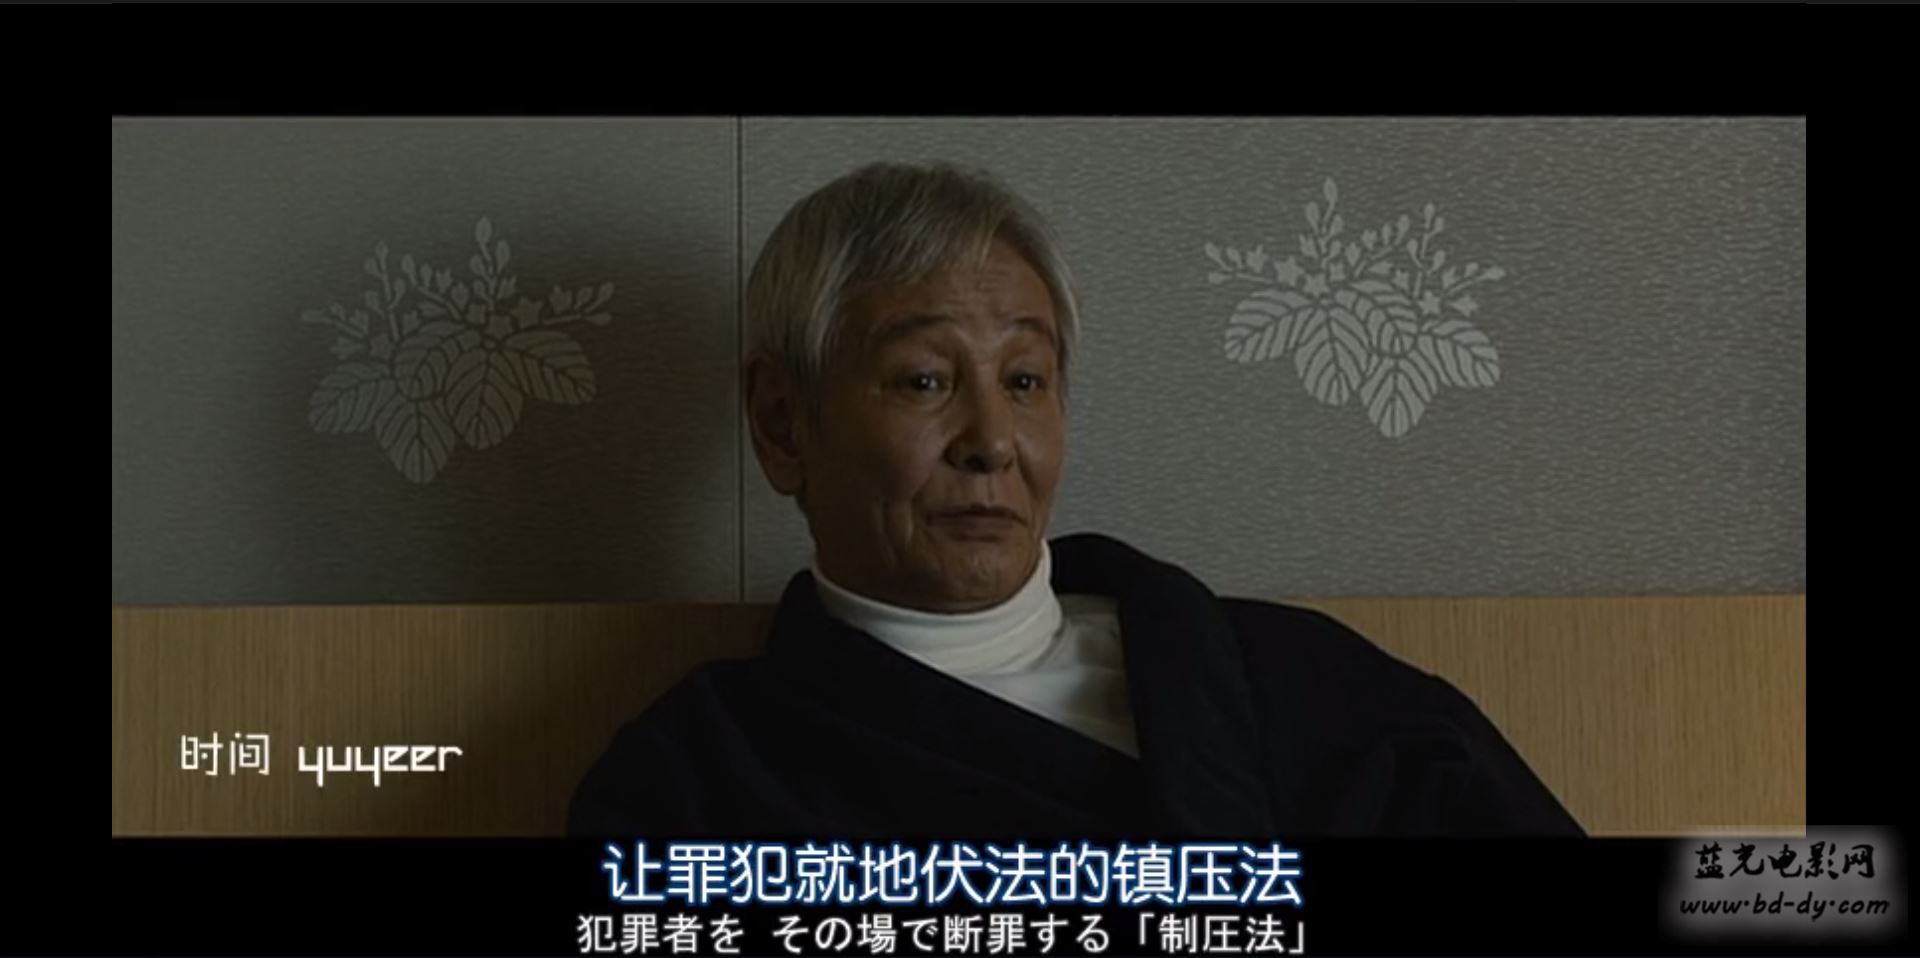 《S-最后的警官 电影版》2015日本动作犯罪.DVD.中日双字截图;jsessionid=UdSQMZz21uZ80B6Qz7Y4DWd6BdVk7JehaILxKki6